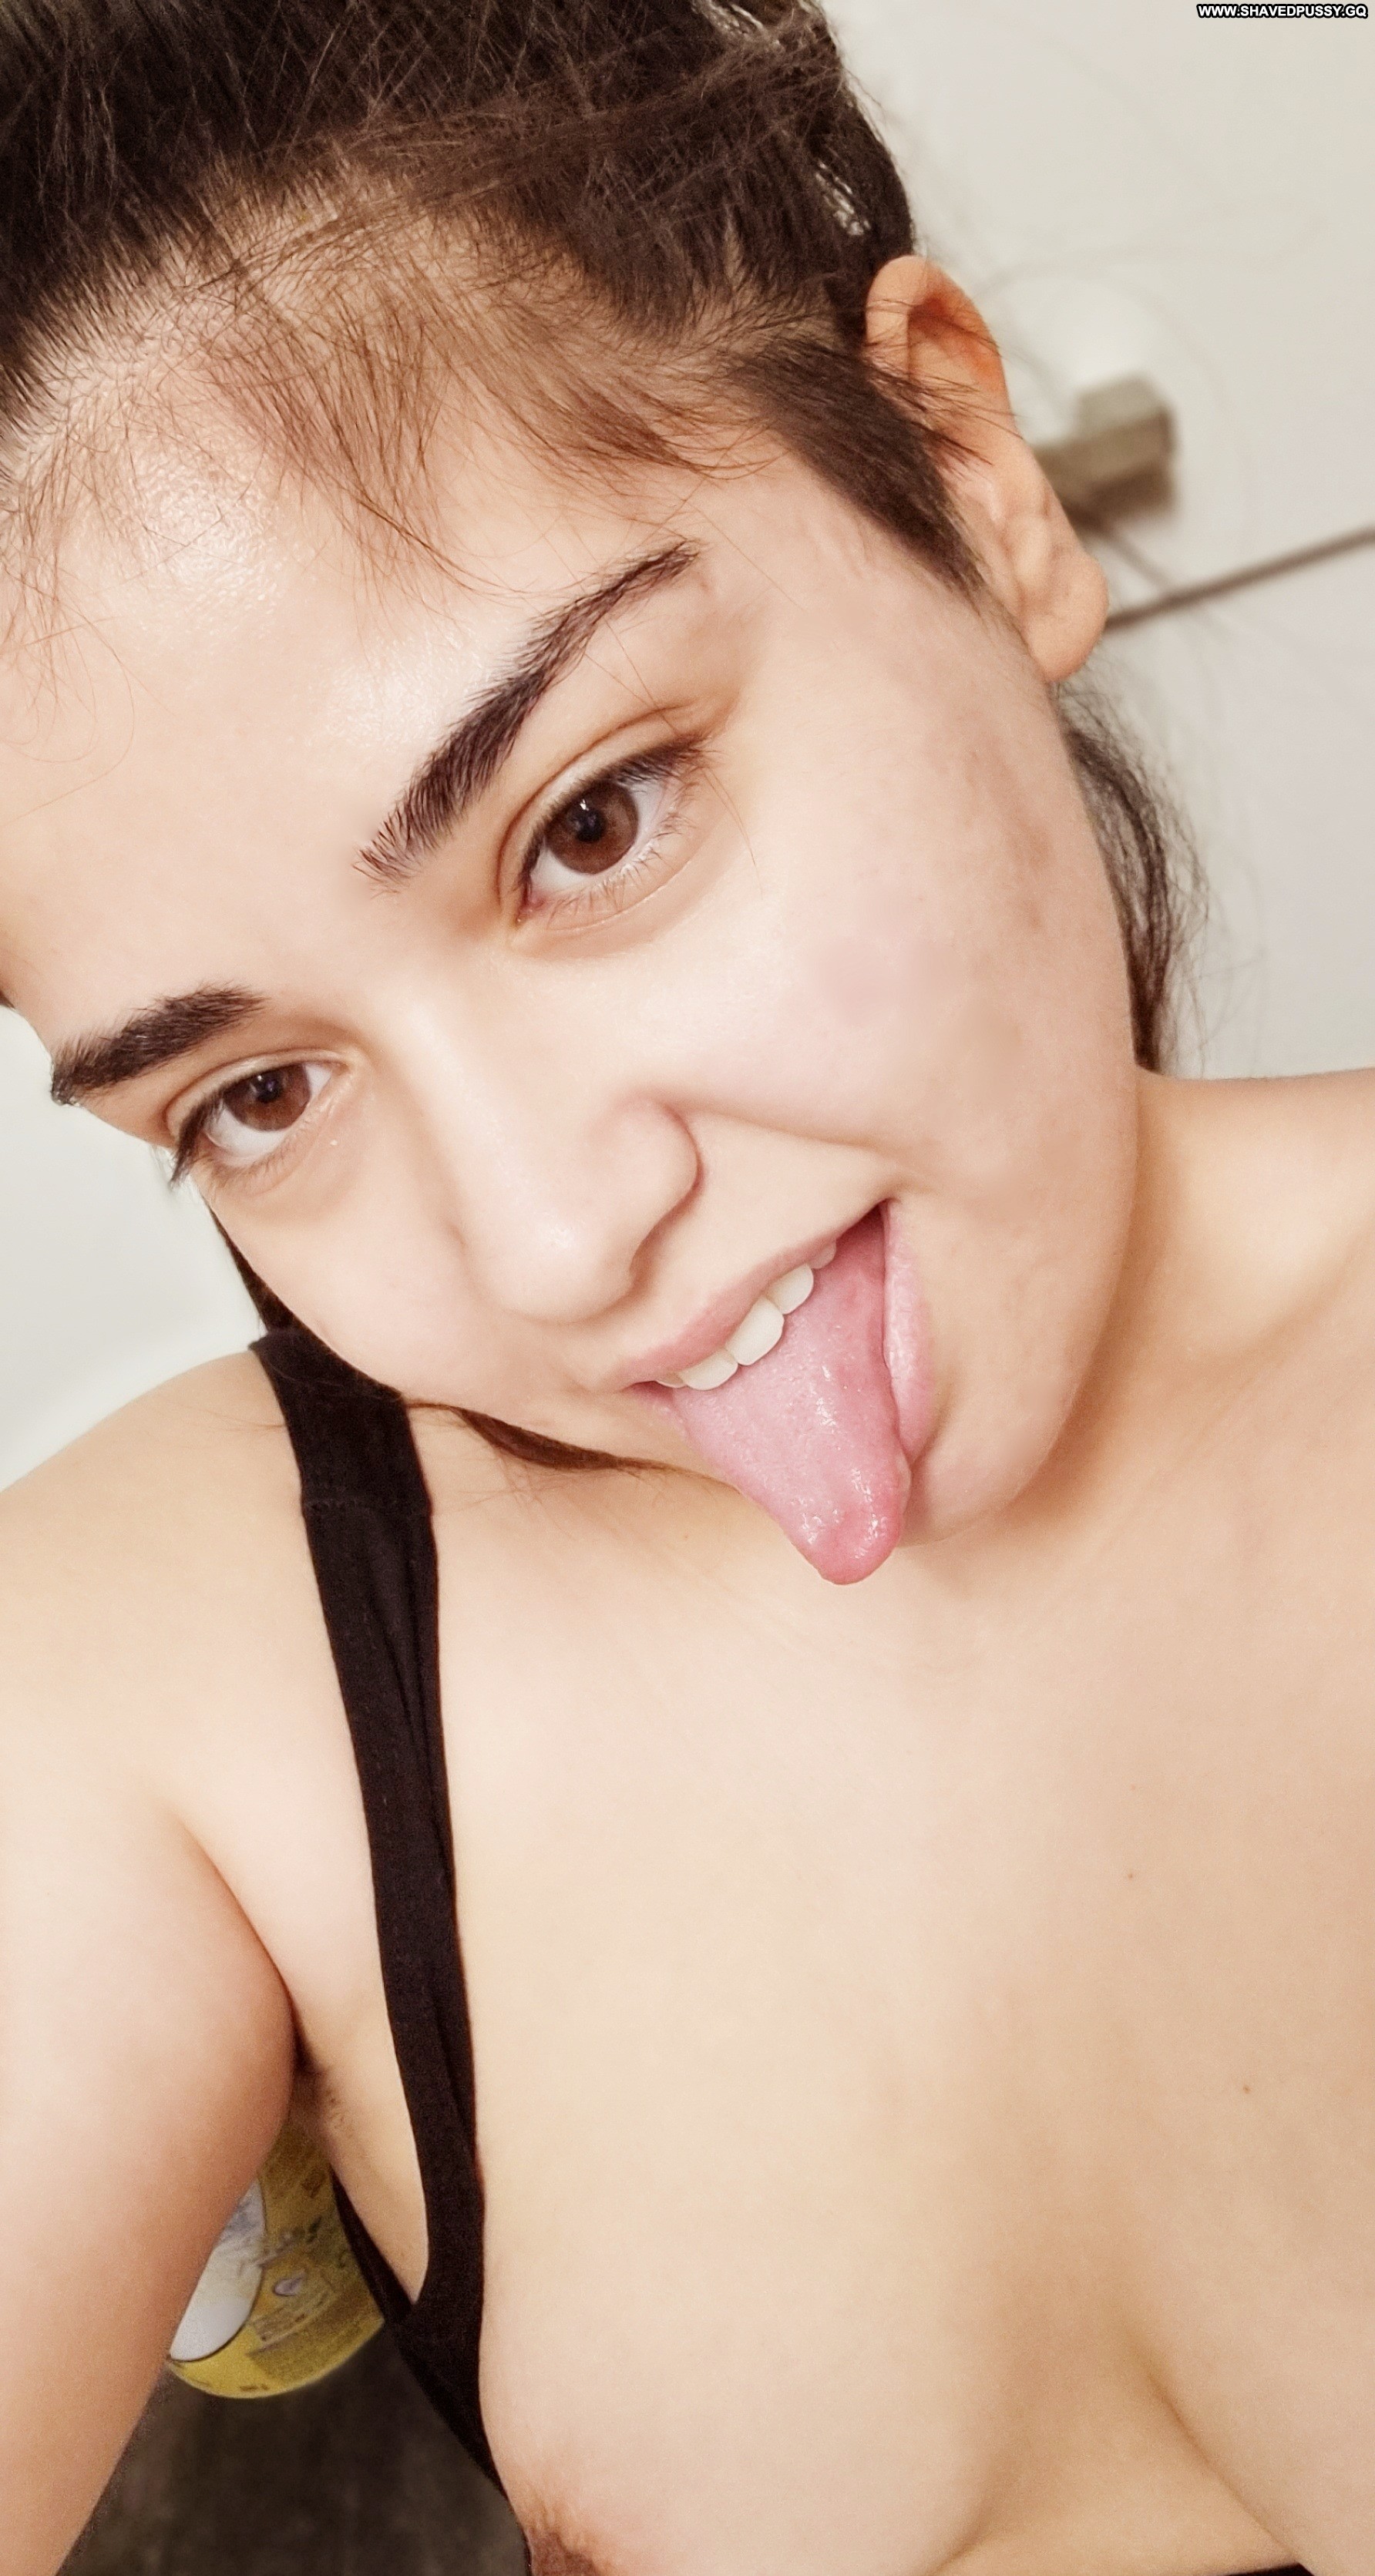 amateur latina shaved pussy Porn Photos